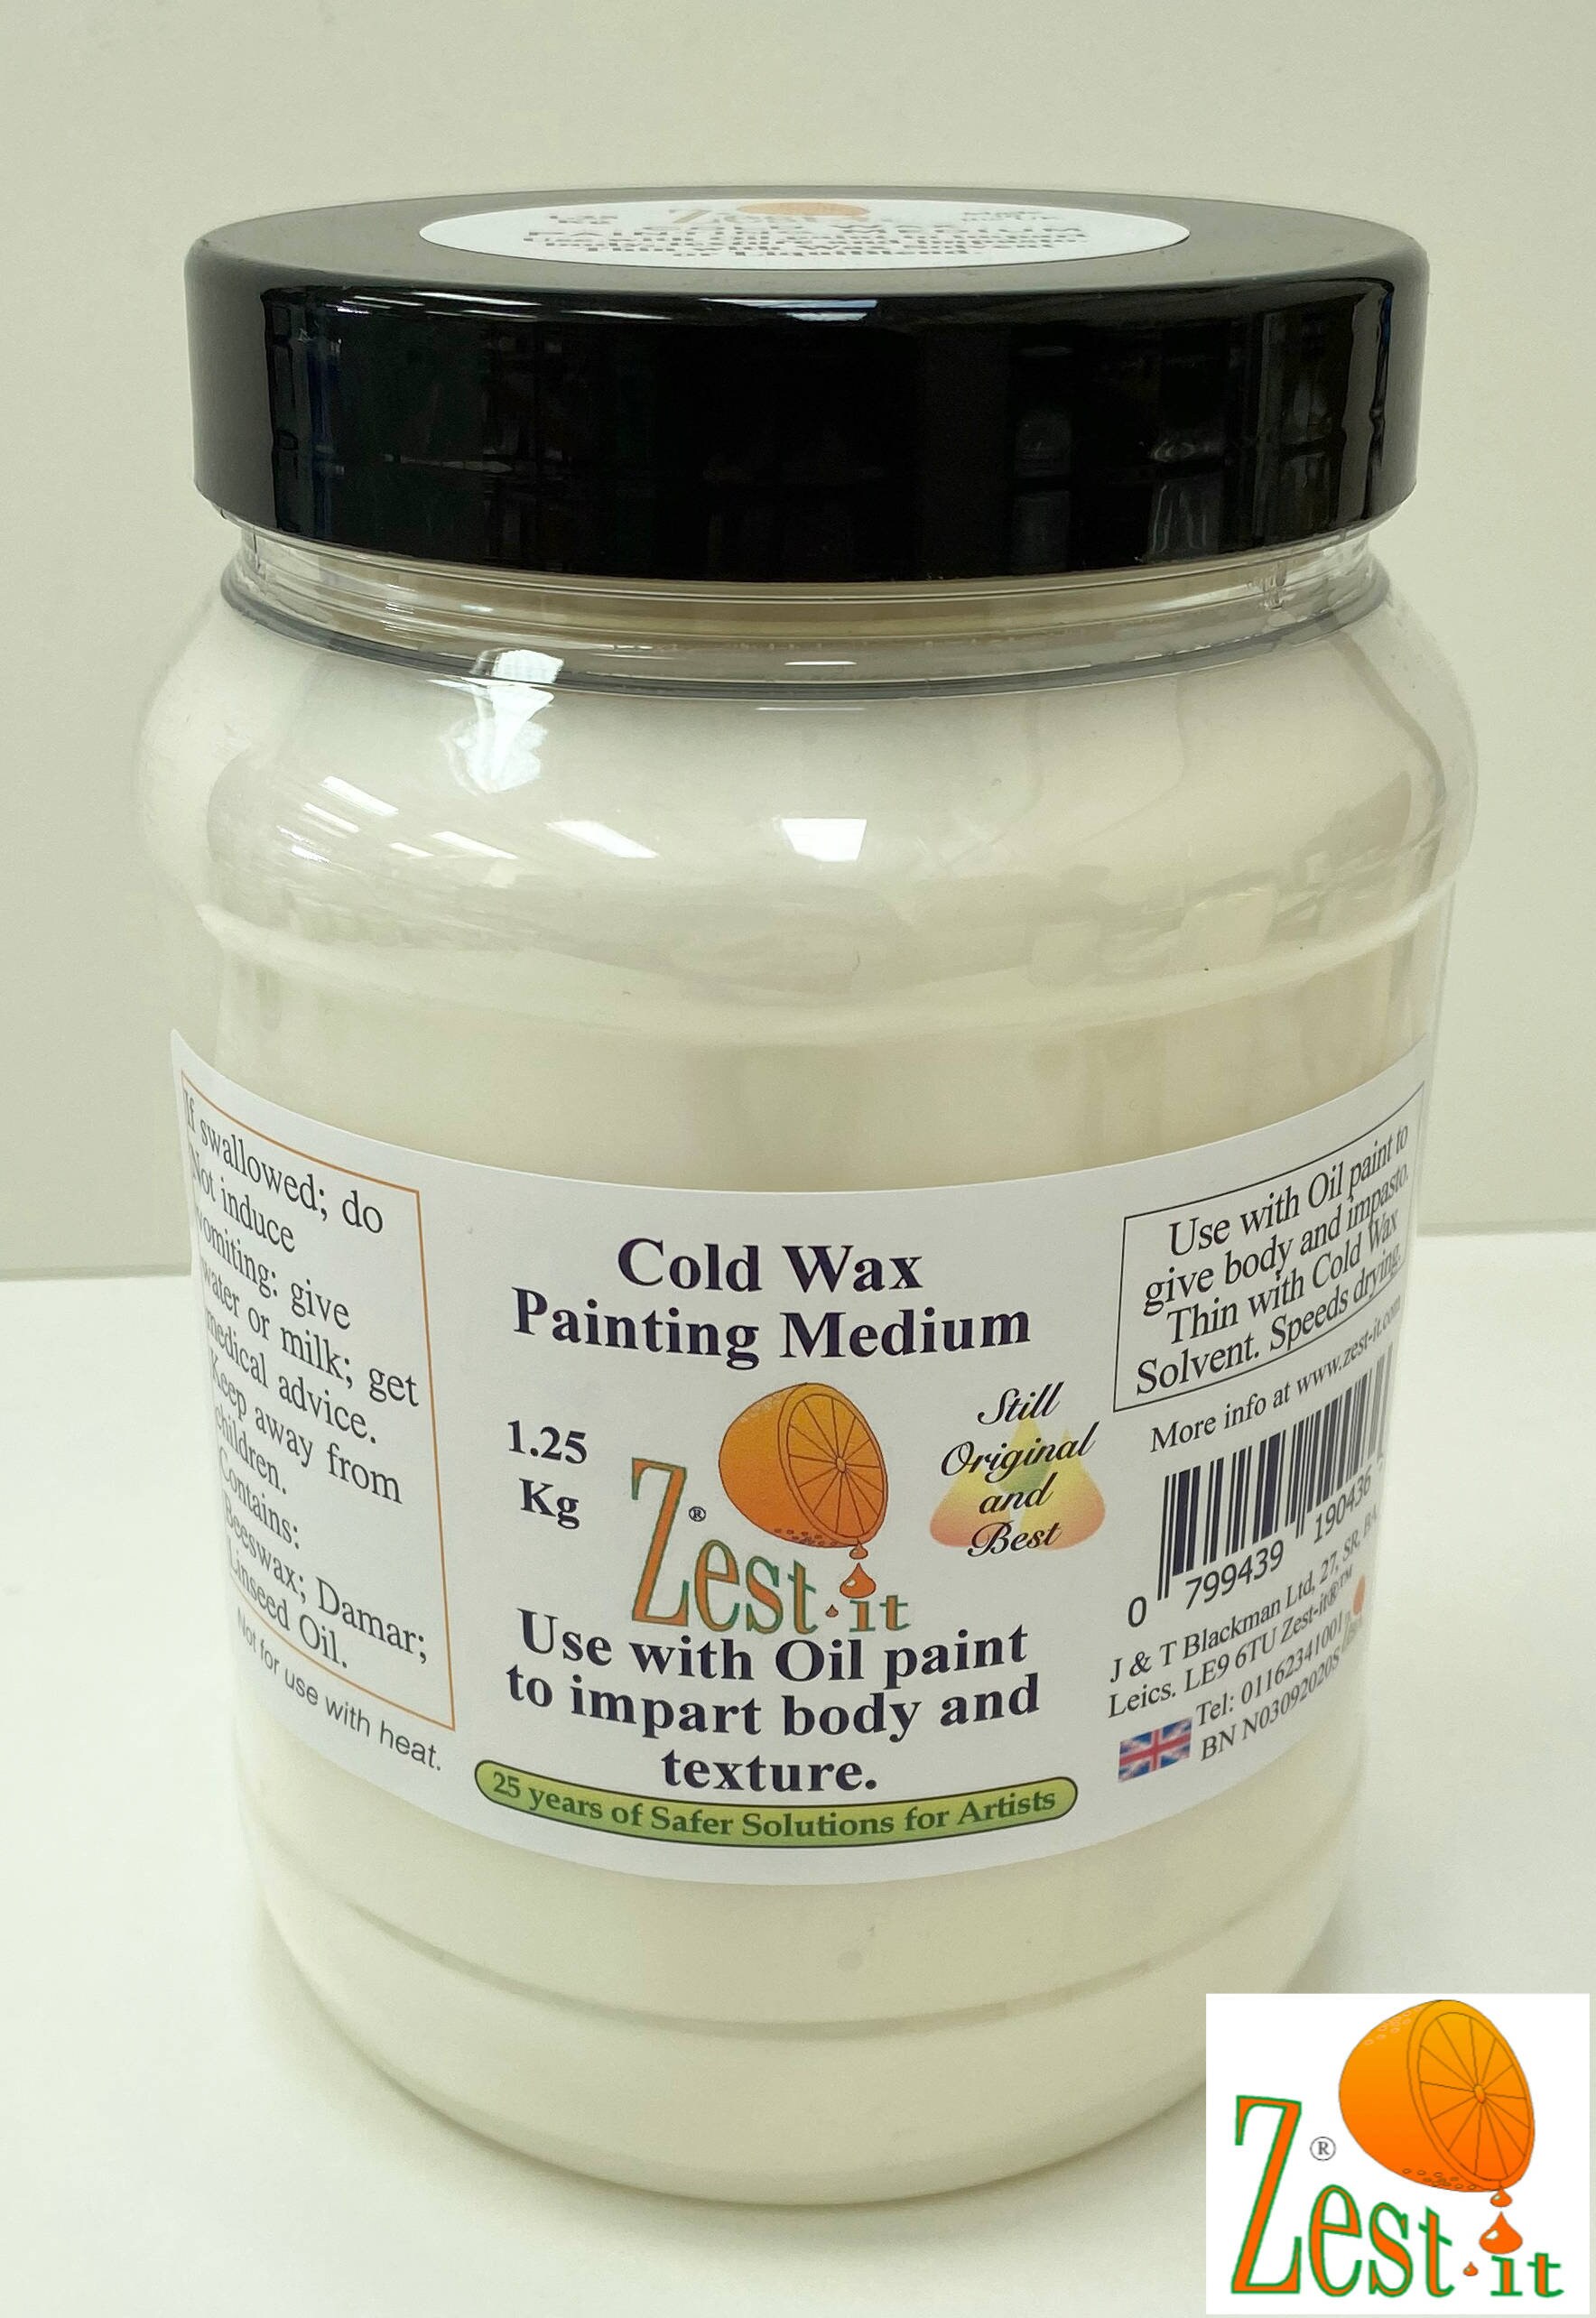 Zest-It Cold Wax Painting Medium